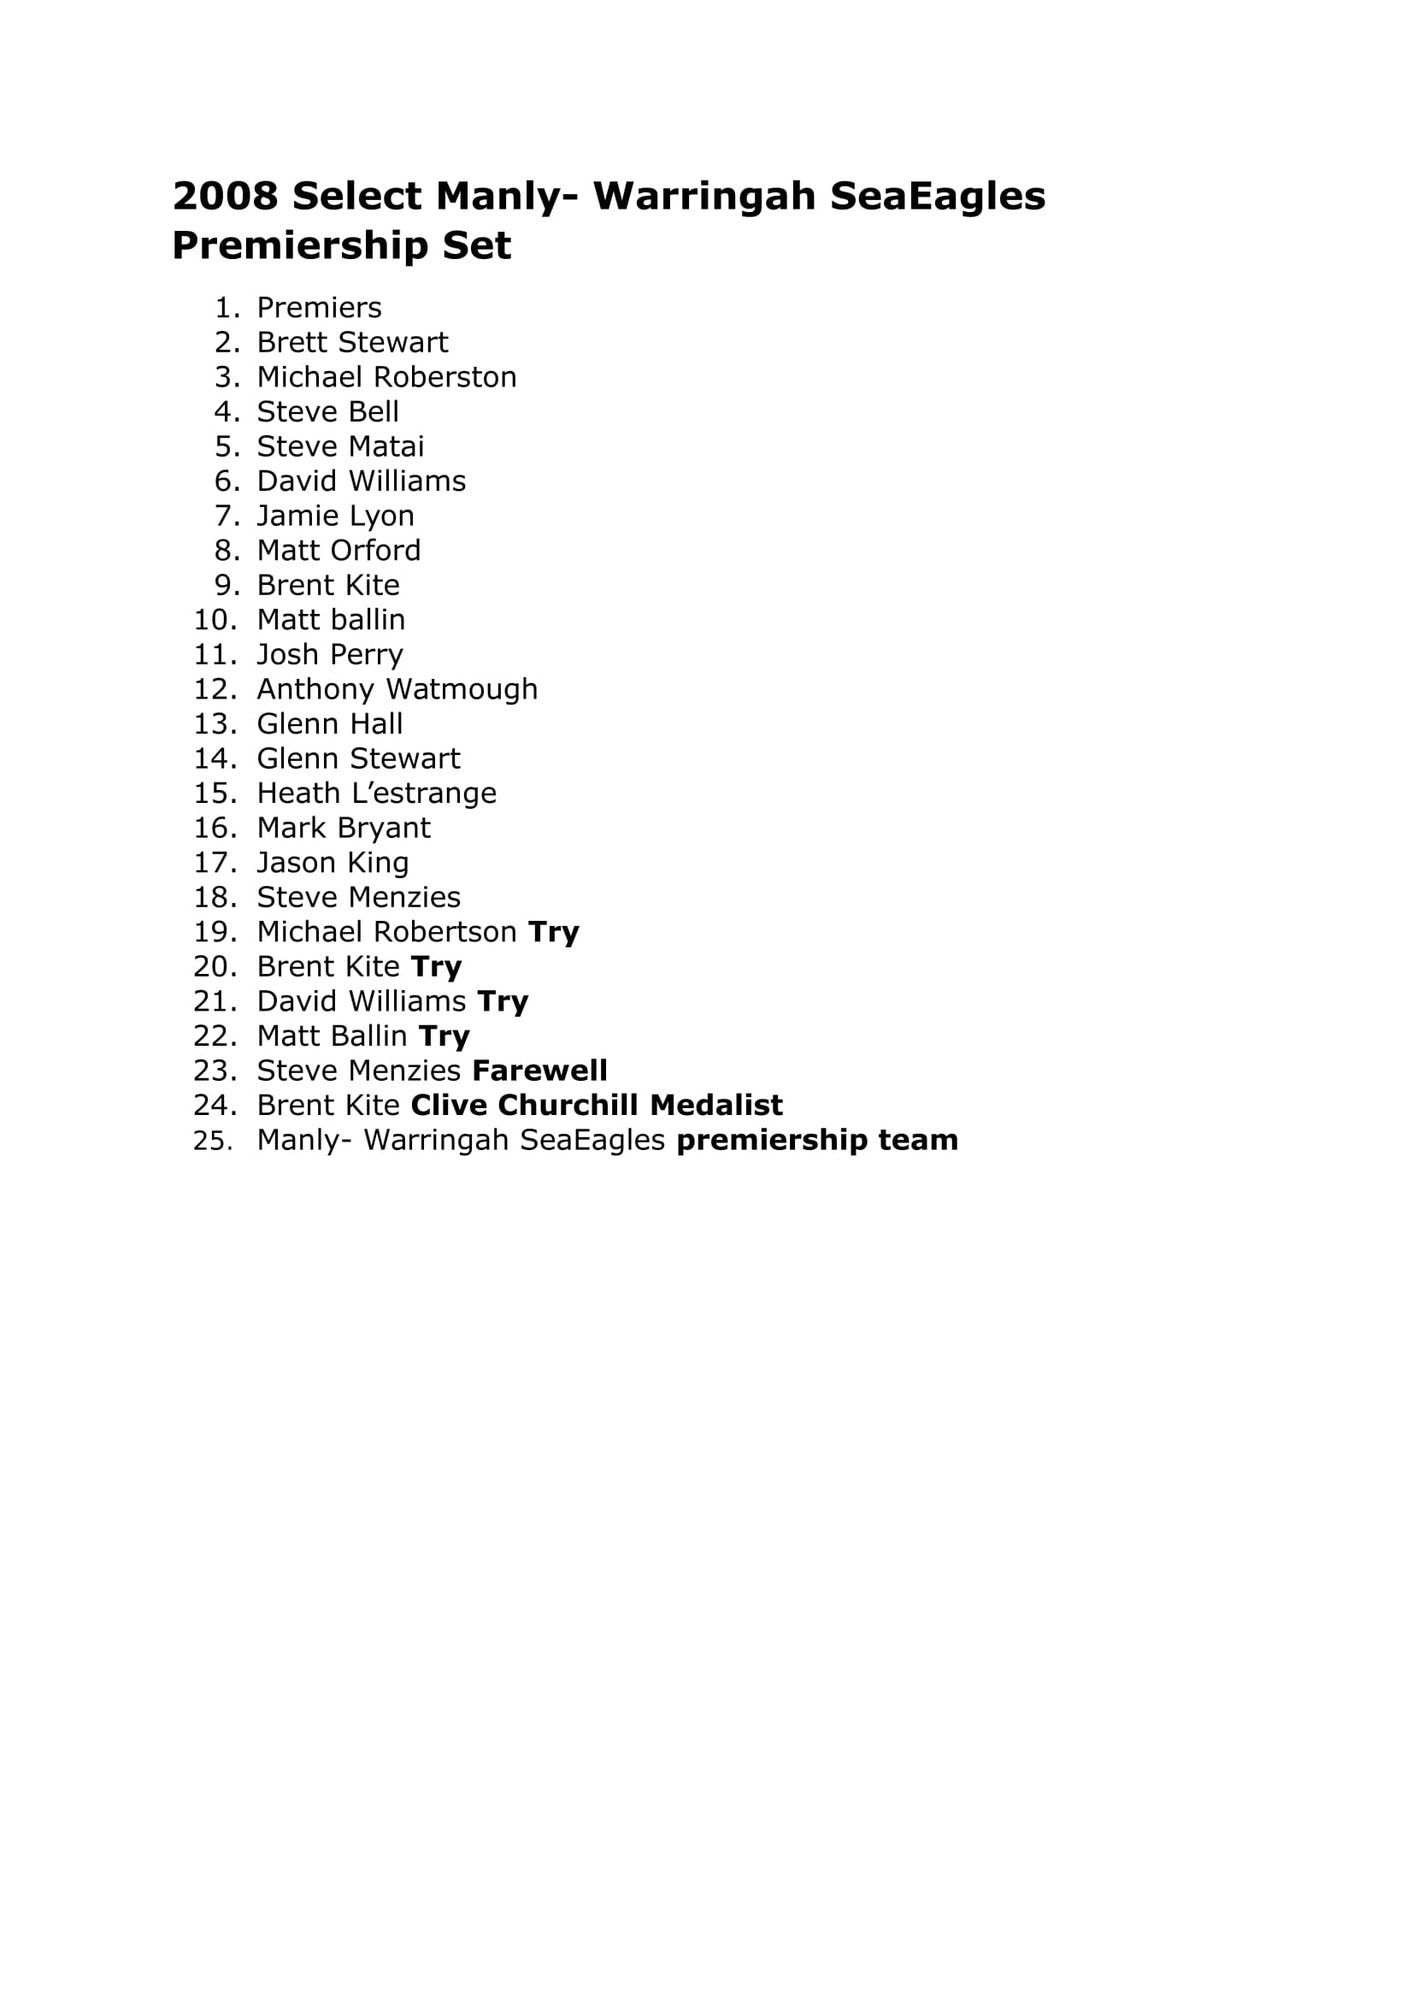 2008 Select Manly SeaEagles Premiership Set-1.jpg